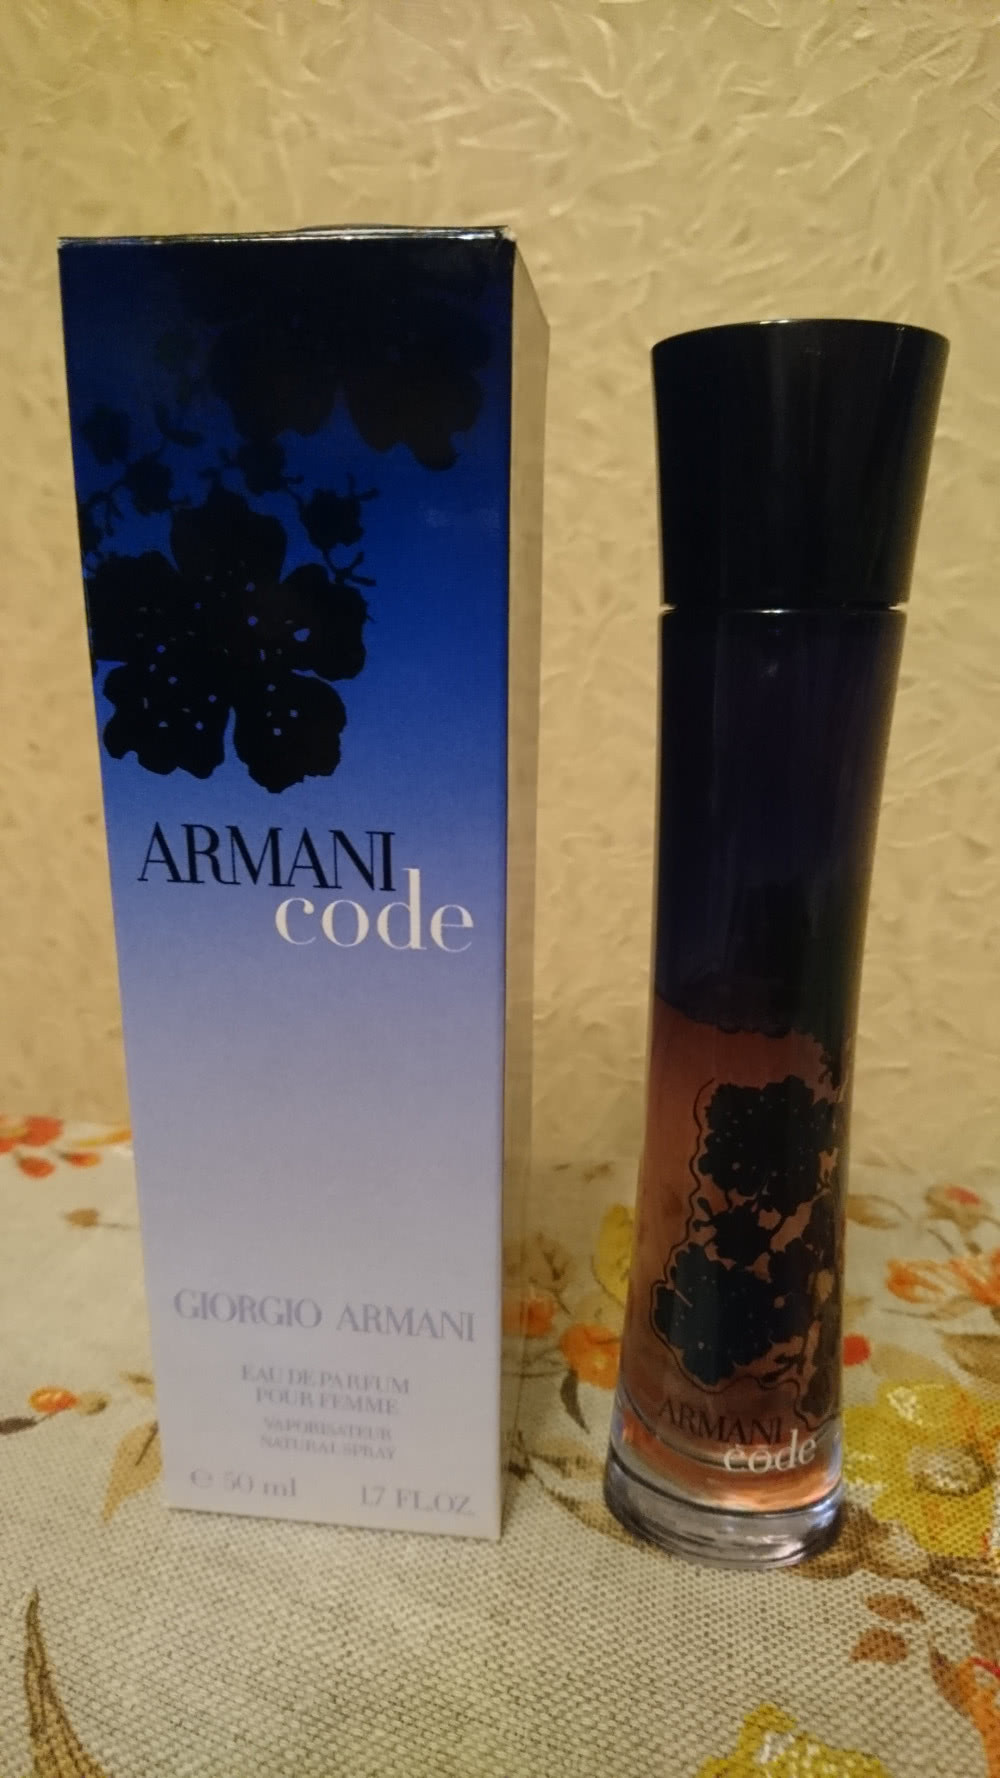 Giorgio Armani ARMANI code eau de parfum 2010 год